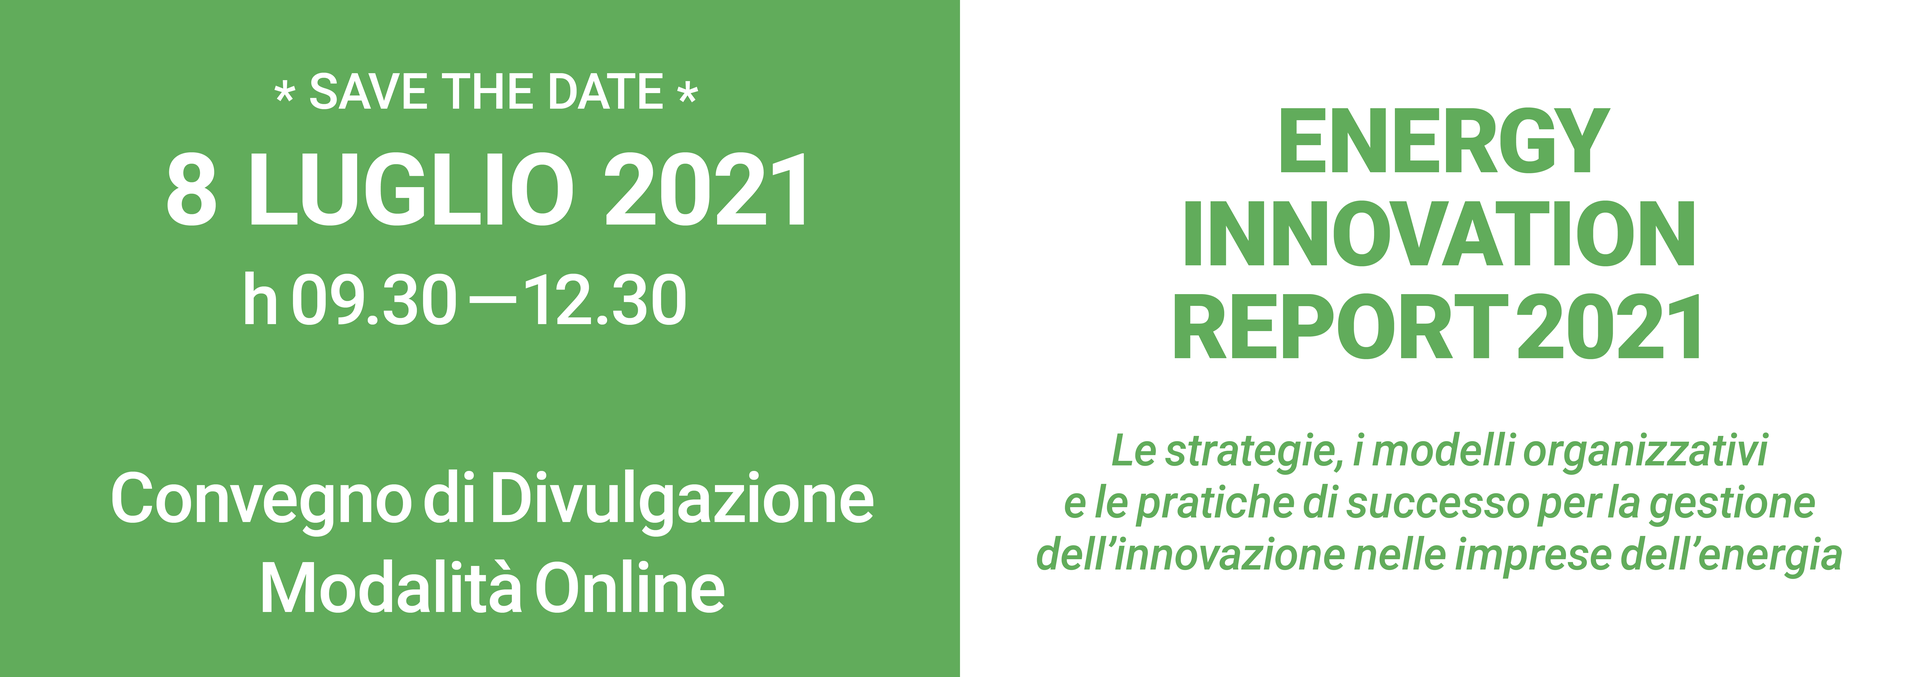 Energy Innovation Report 2021